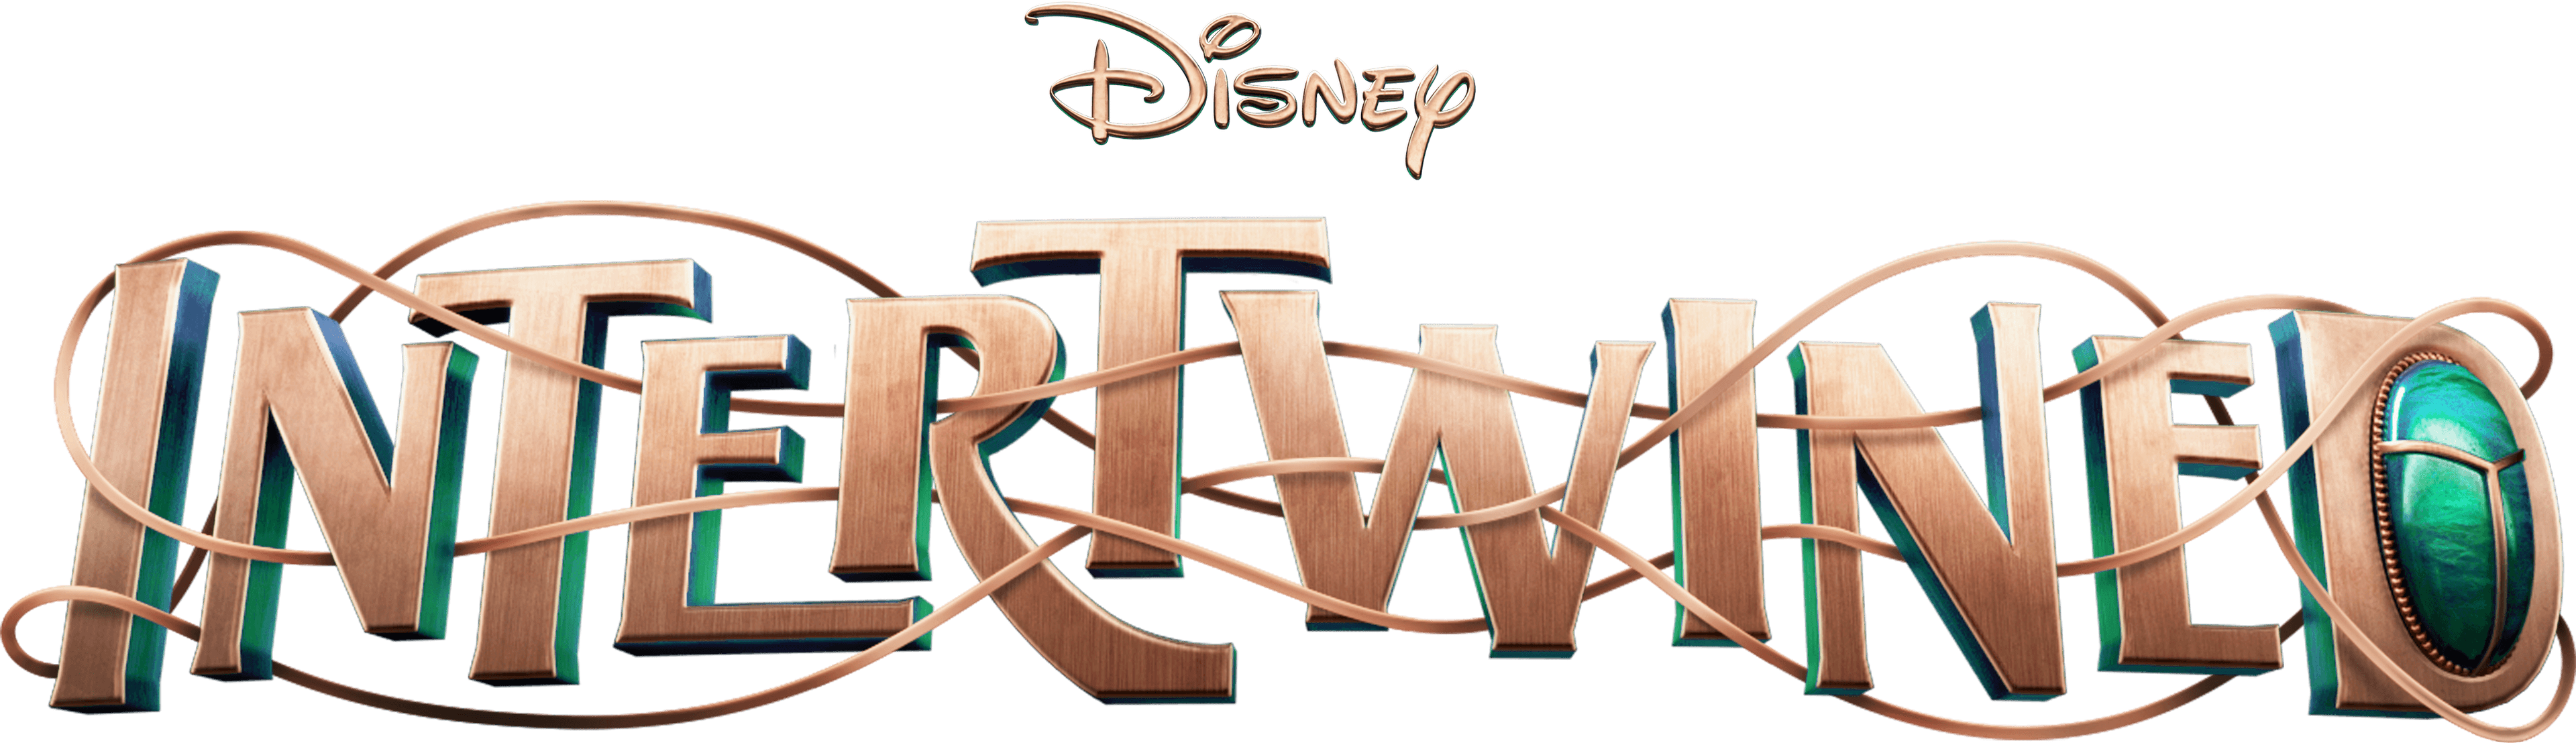 Disney Intertwined logo